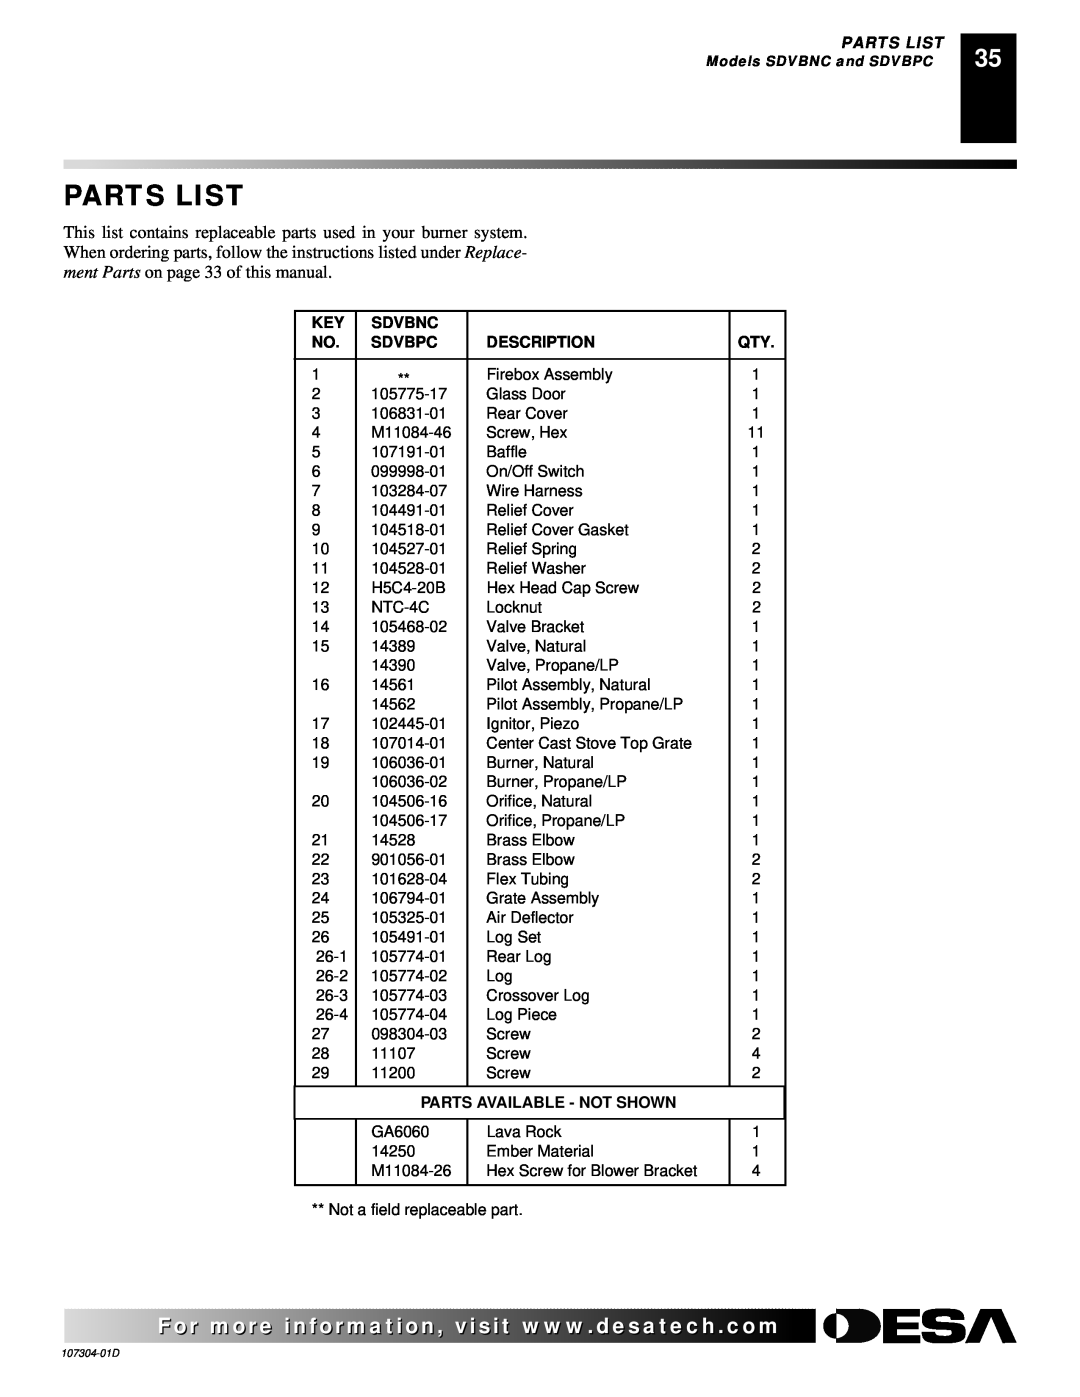 Desa SDVBNC, SDVBPC installation manual Parts List, Sdvbnc, Sdvbpc, Description, Parts Available - Not Shown 